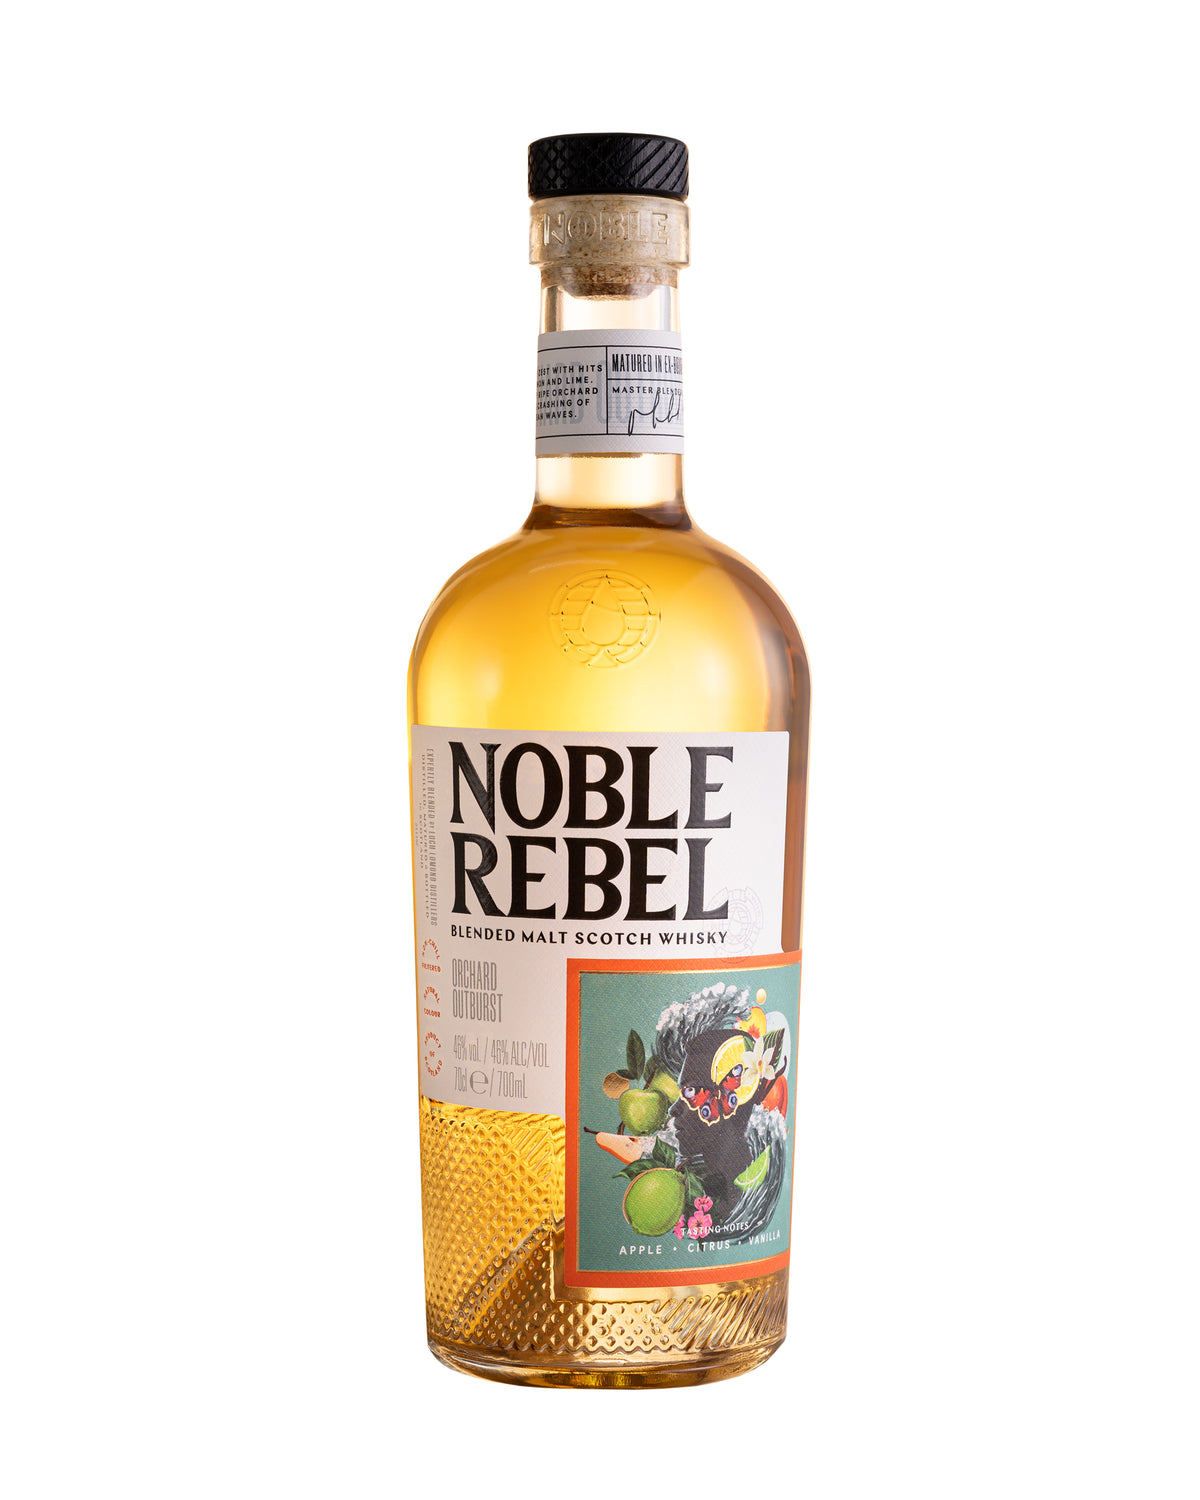 Noble Rebel Whisky - Orchard Outburst